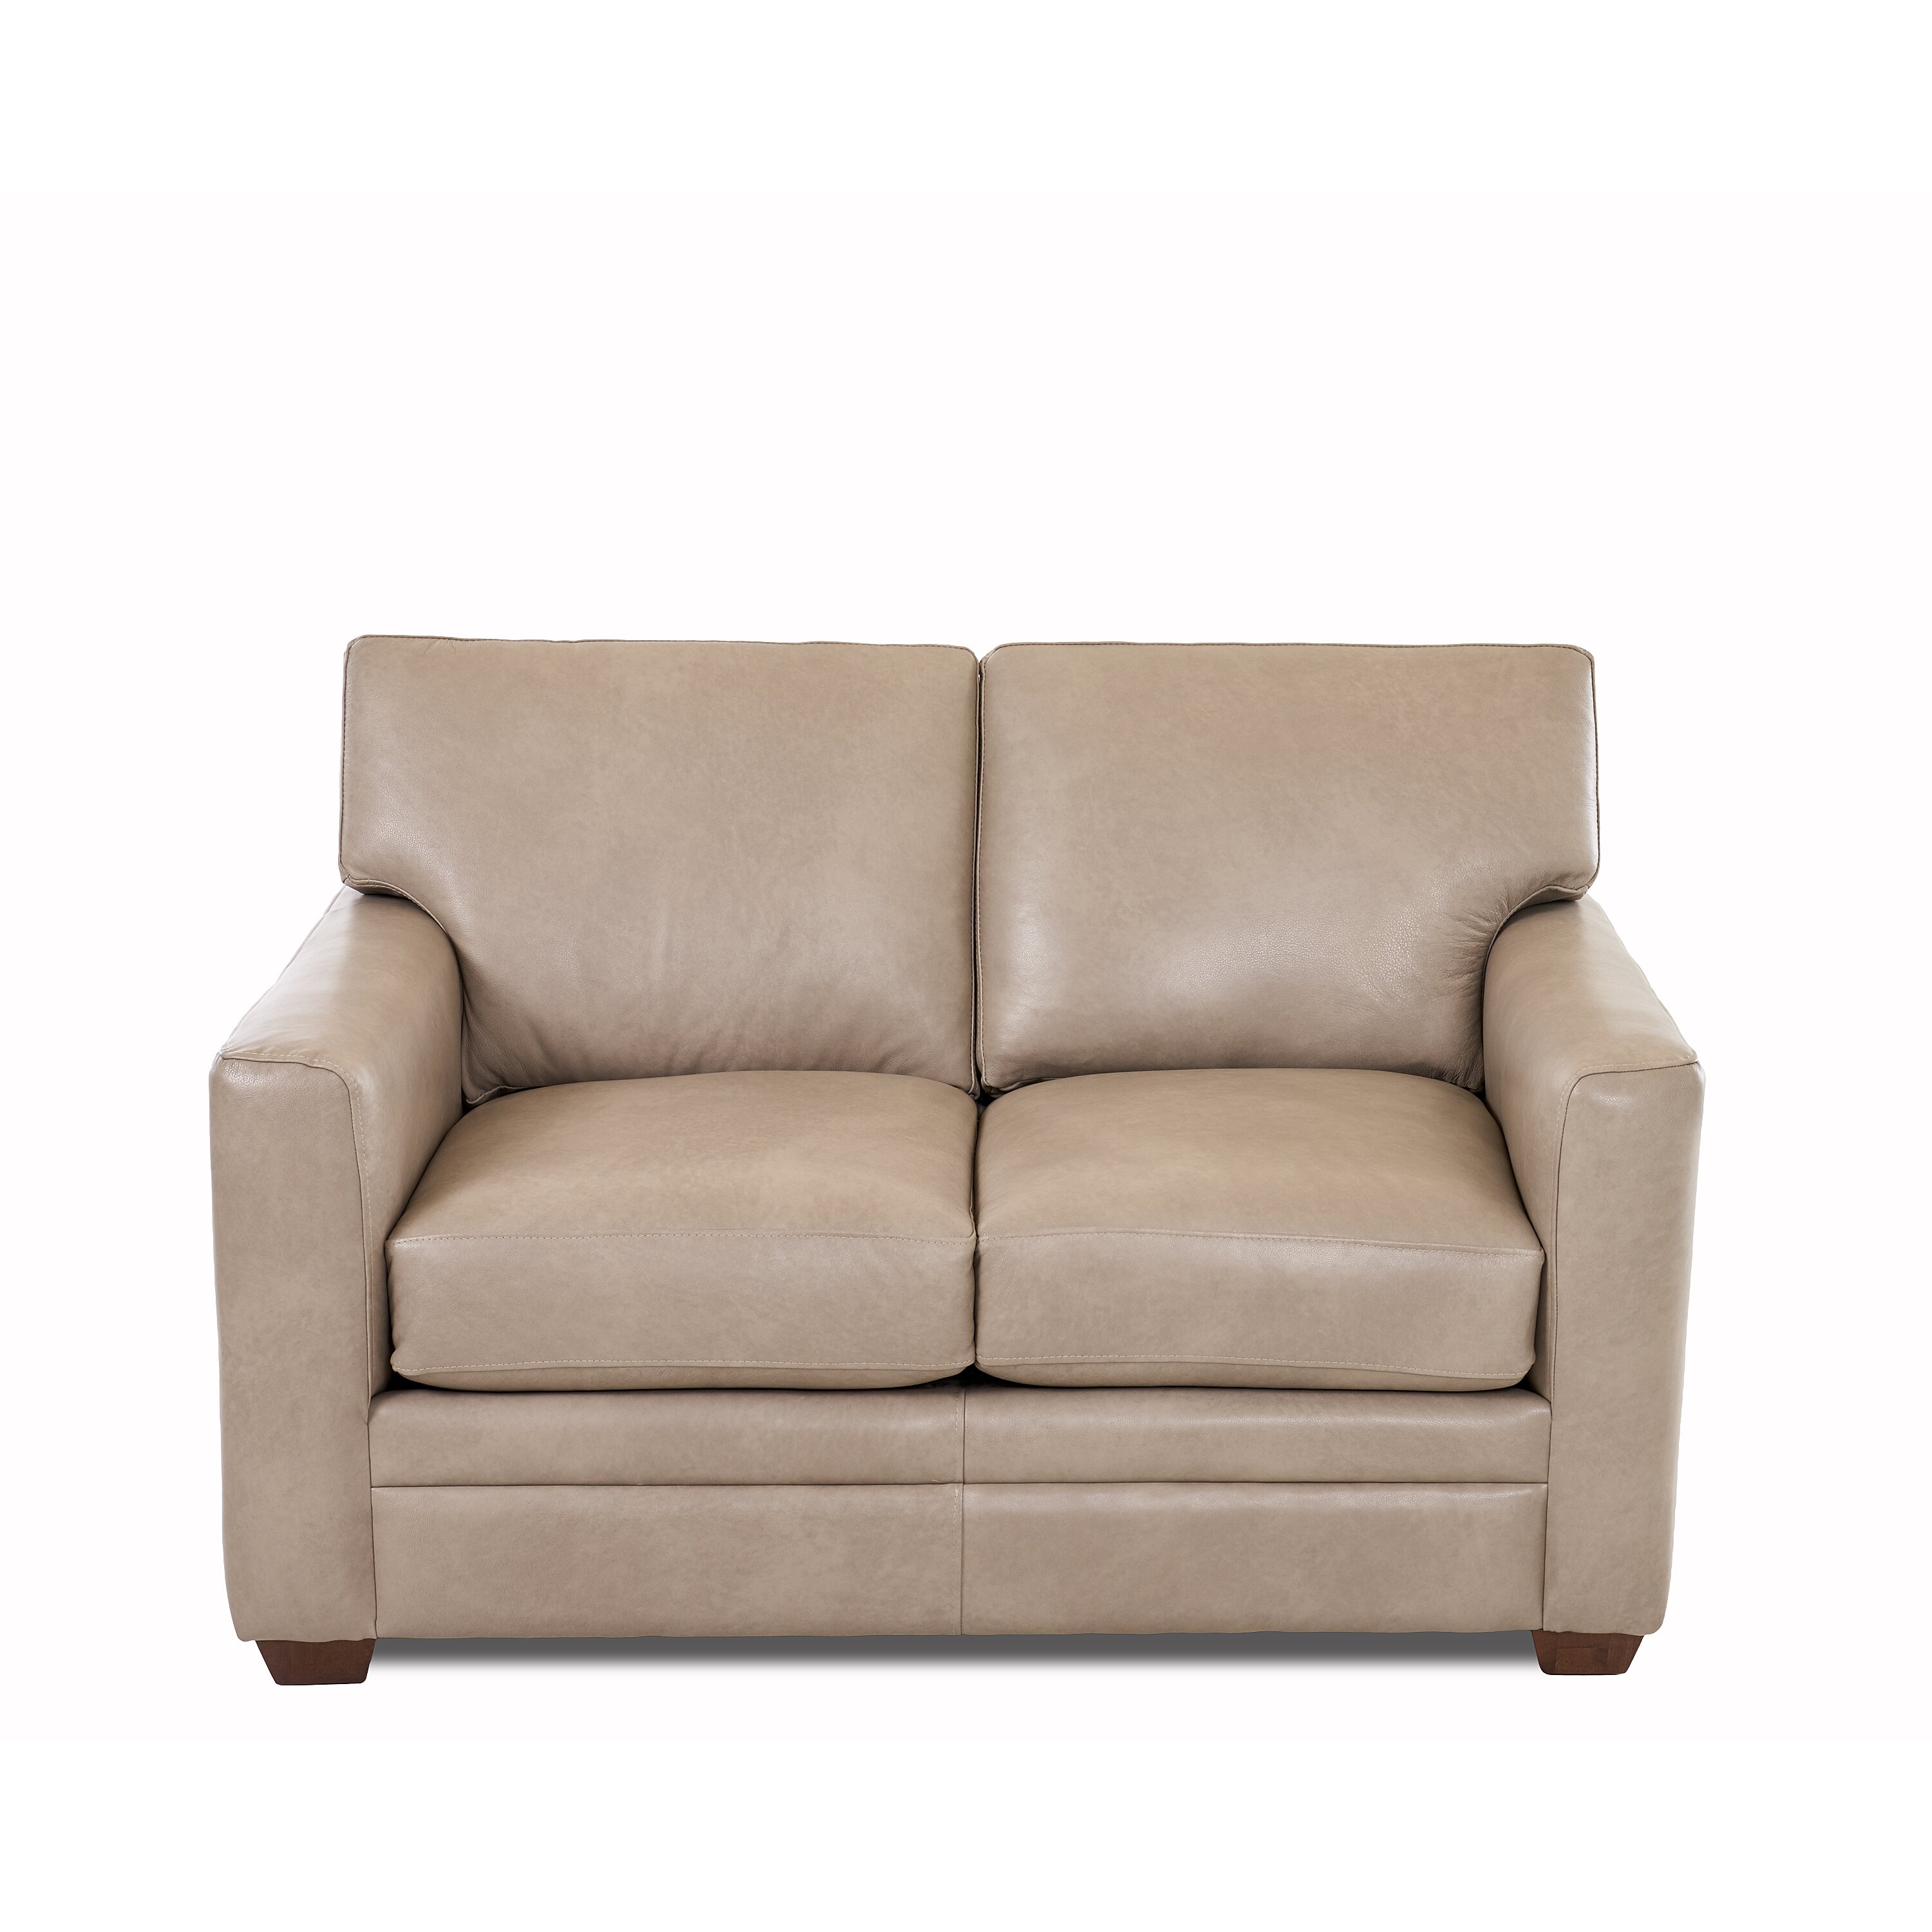 Wayfair Custom Upholstery Jennifer Leather Sleeper Sofa & Reviews | Wayfair